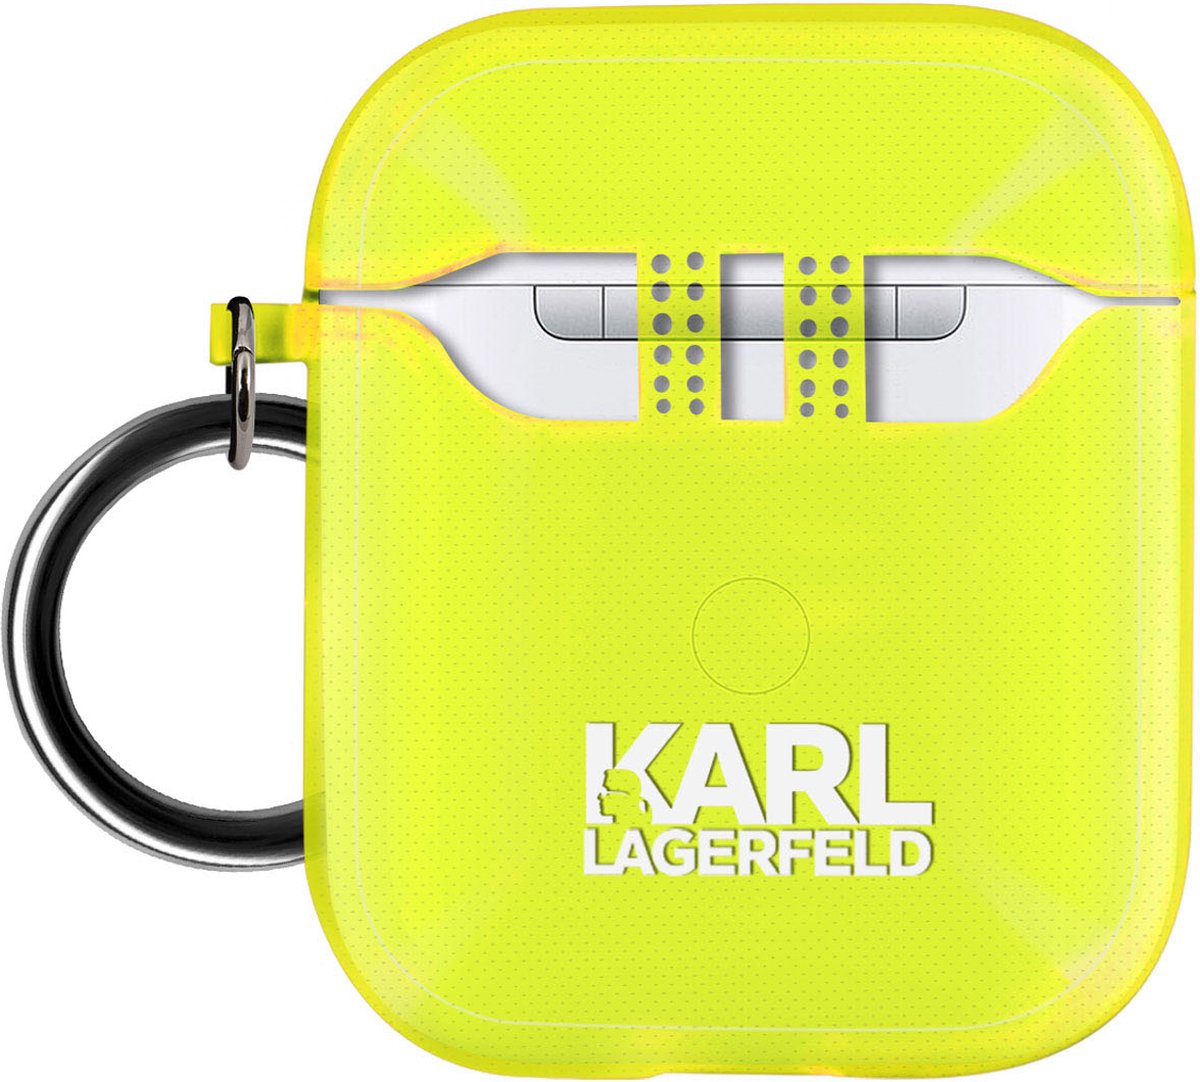 Siliconen gel Airpods case met haak Choupette Ikonik Karl Lagerfeld Geel